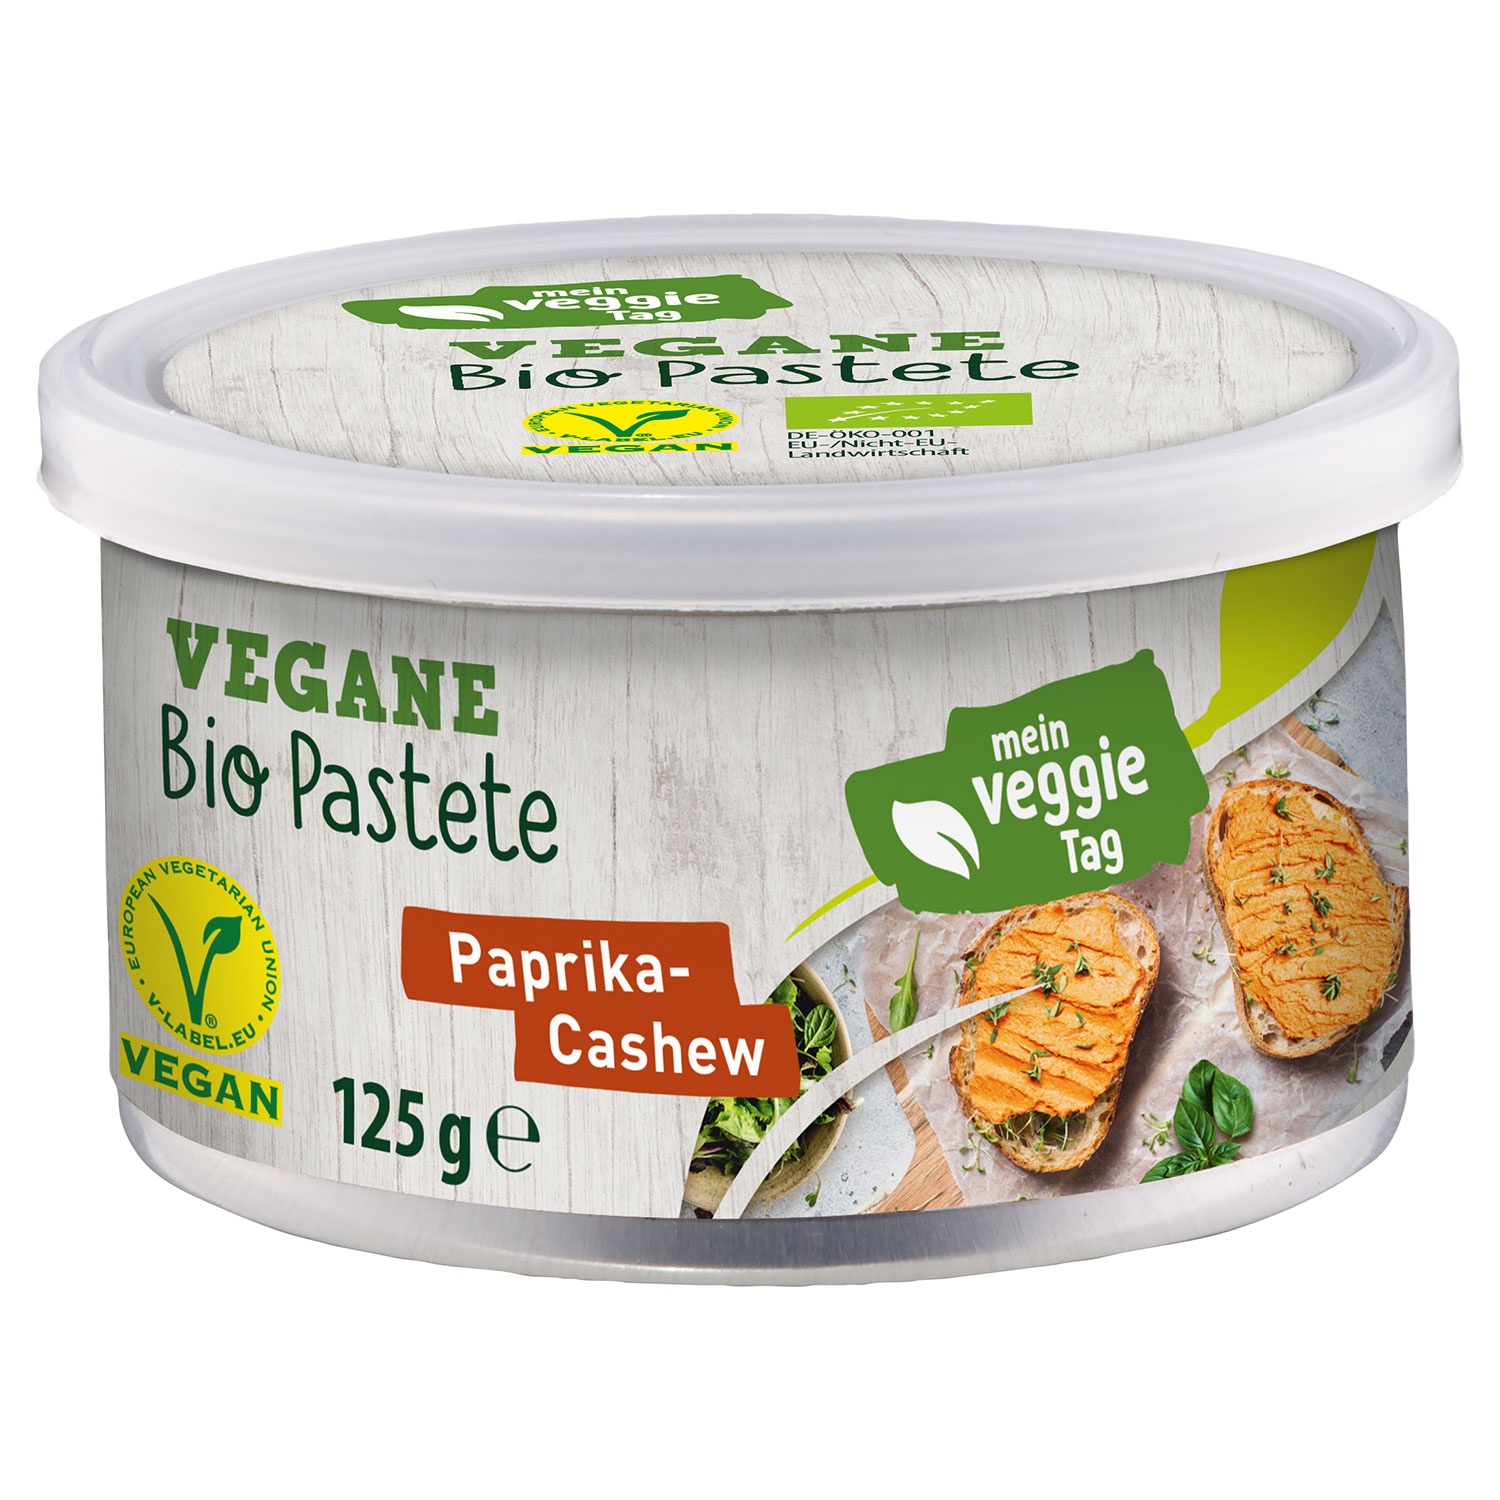 MEIN VEGGIE TAG Vegane Bio-Pastete 125 g